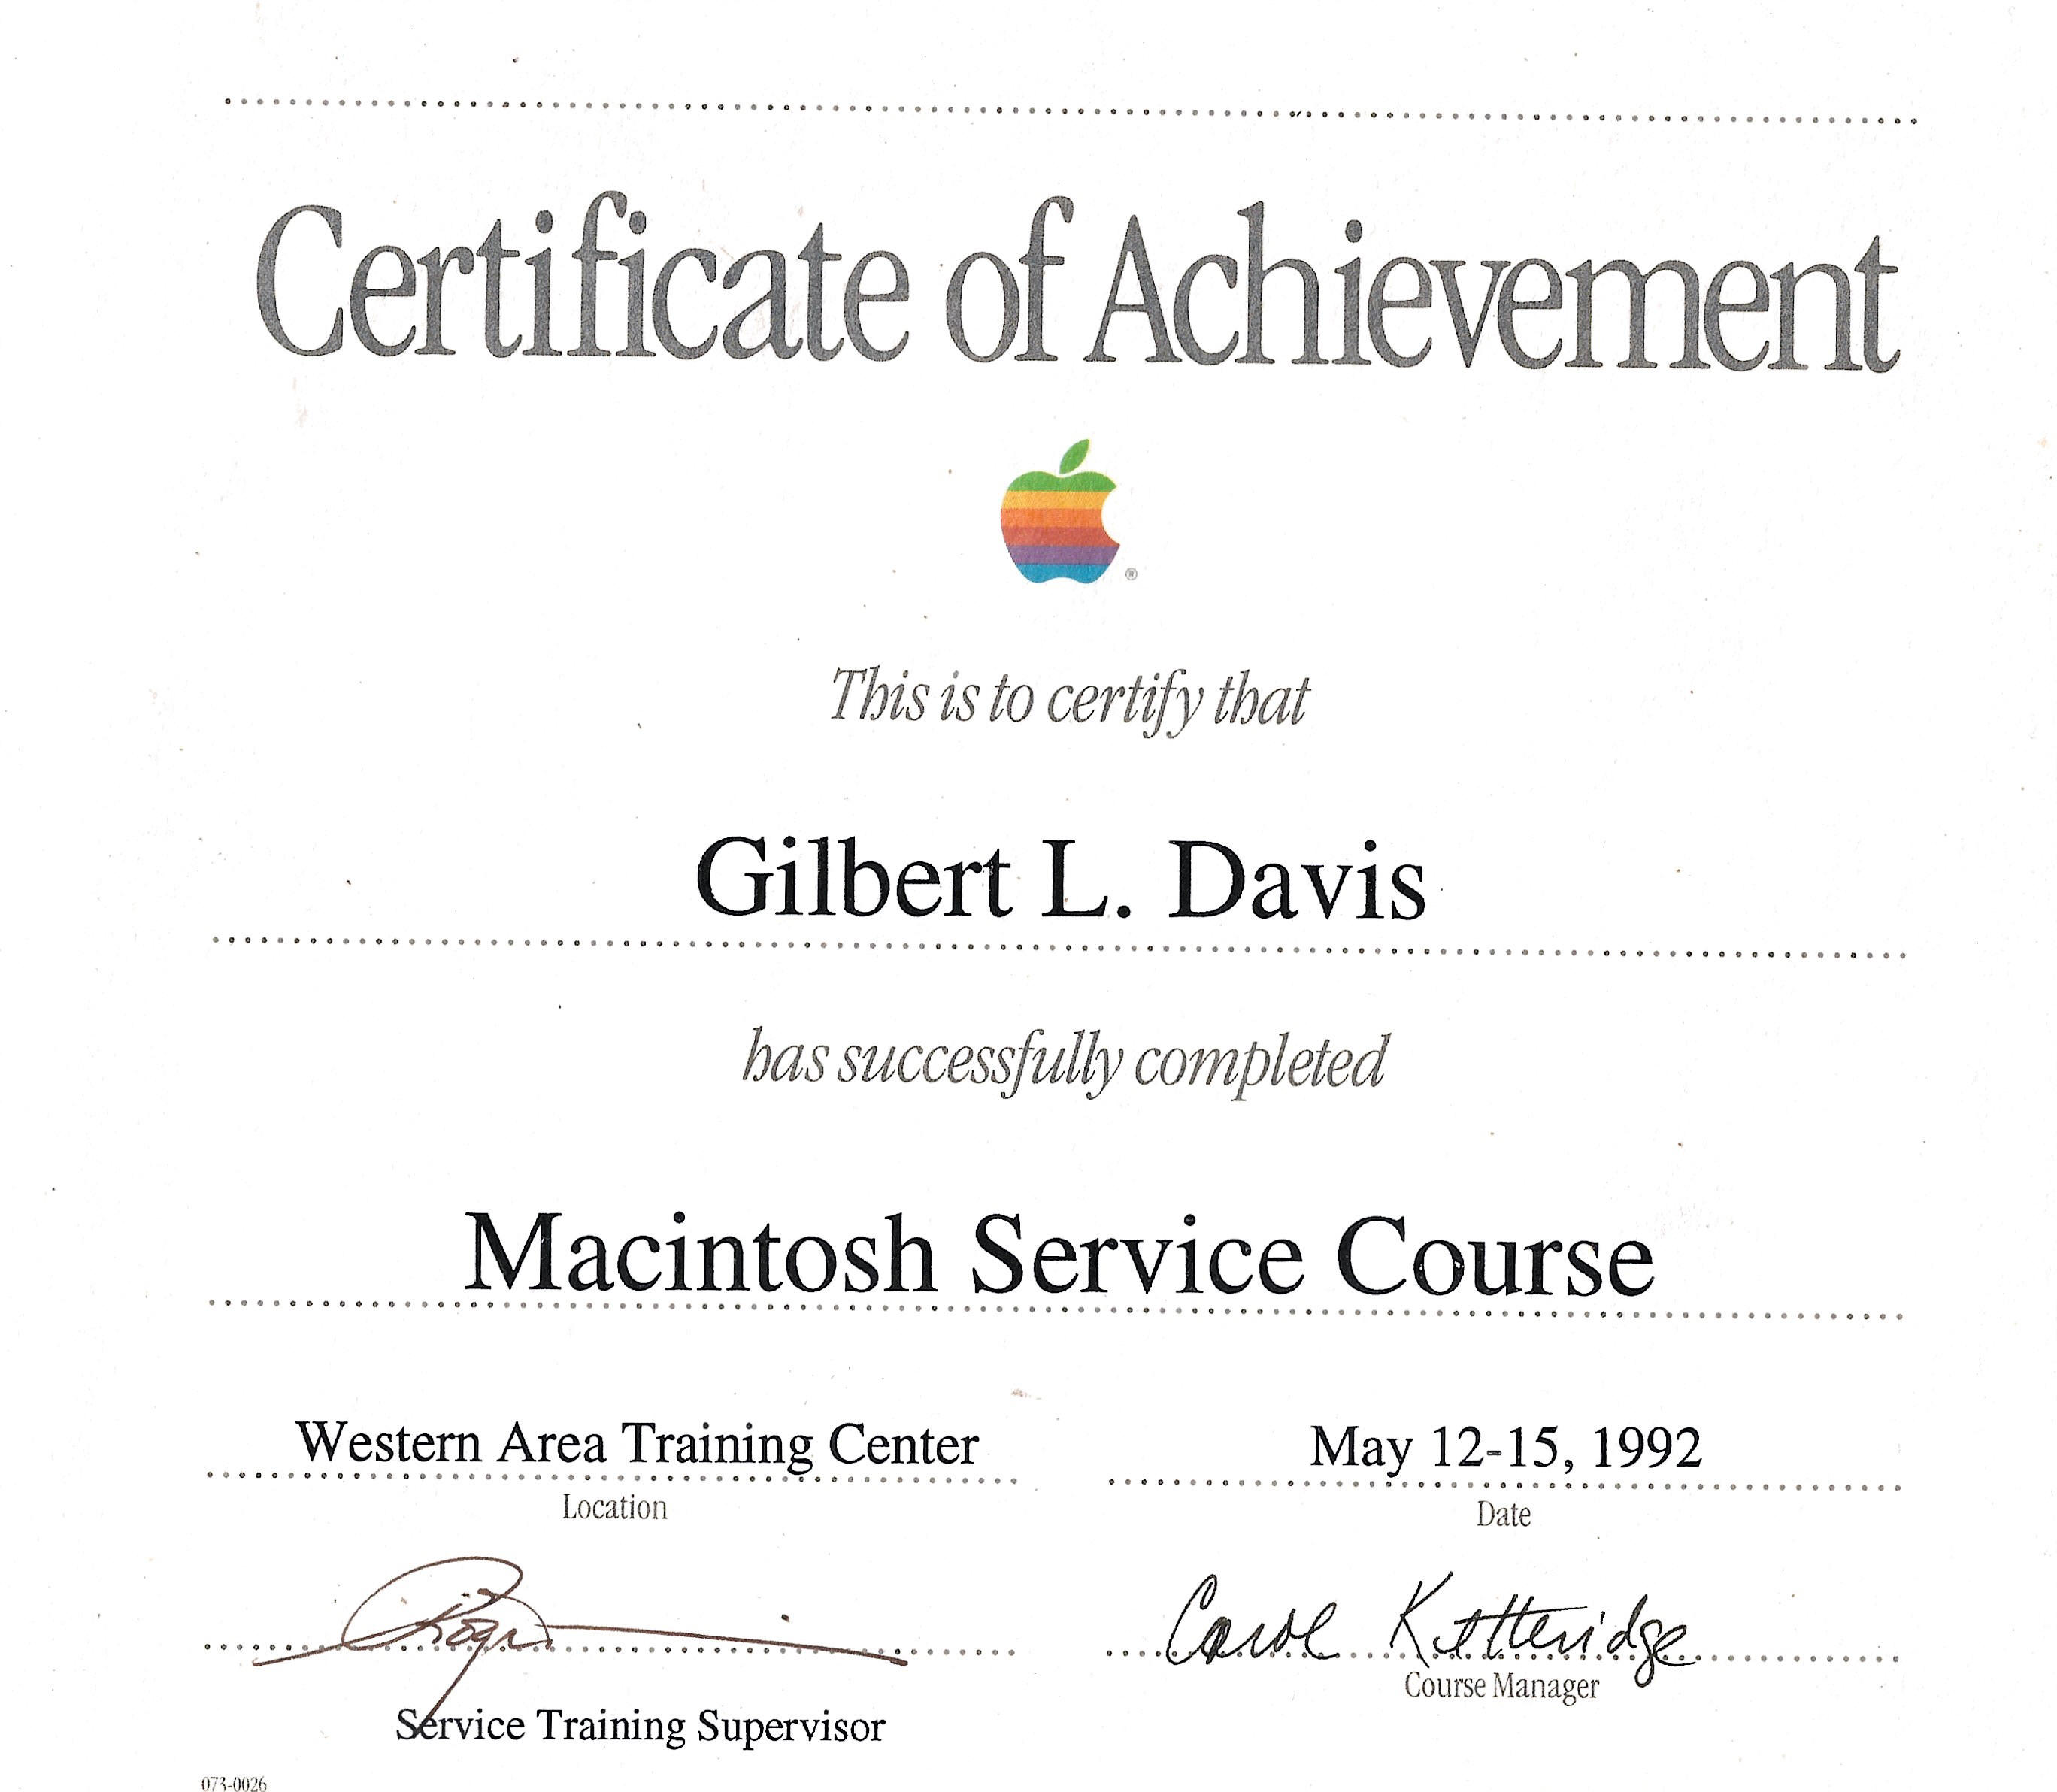 Apple Certification